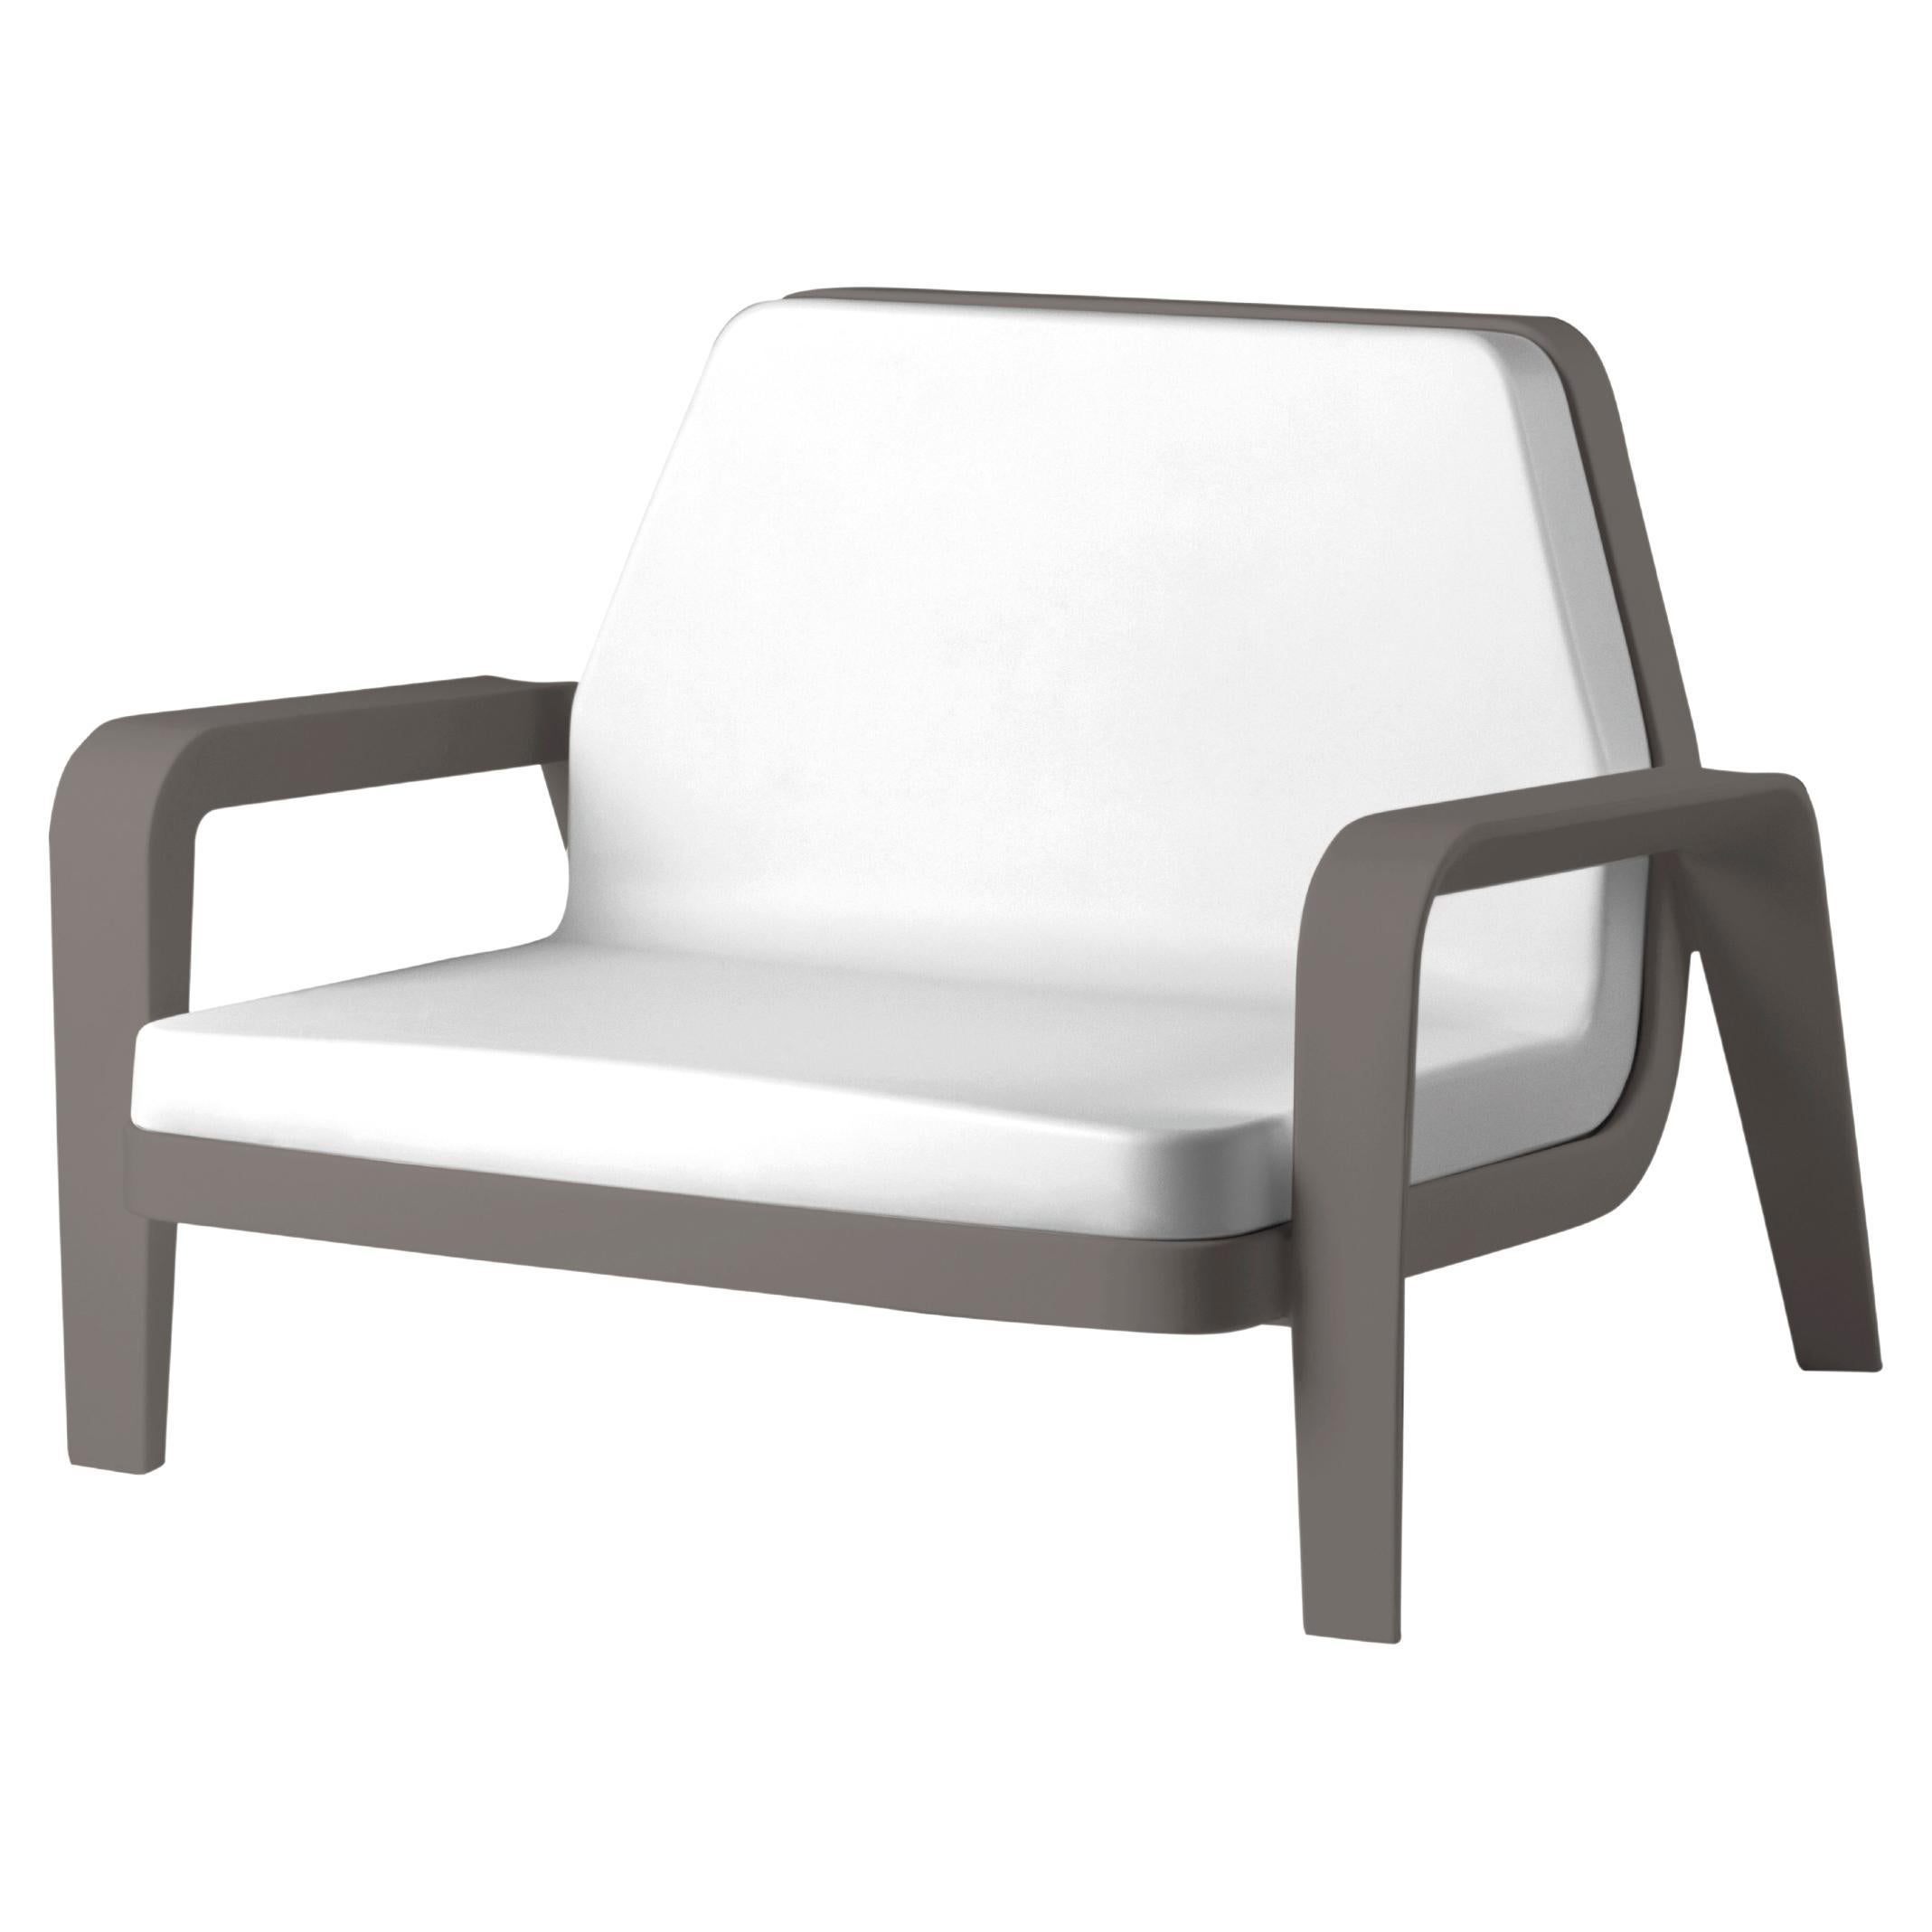 Slide Design America Armchair in Soft White Fabric with Argil Gray Frame